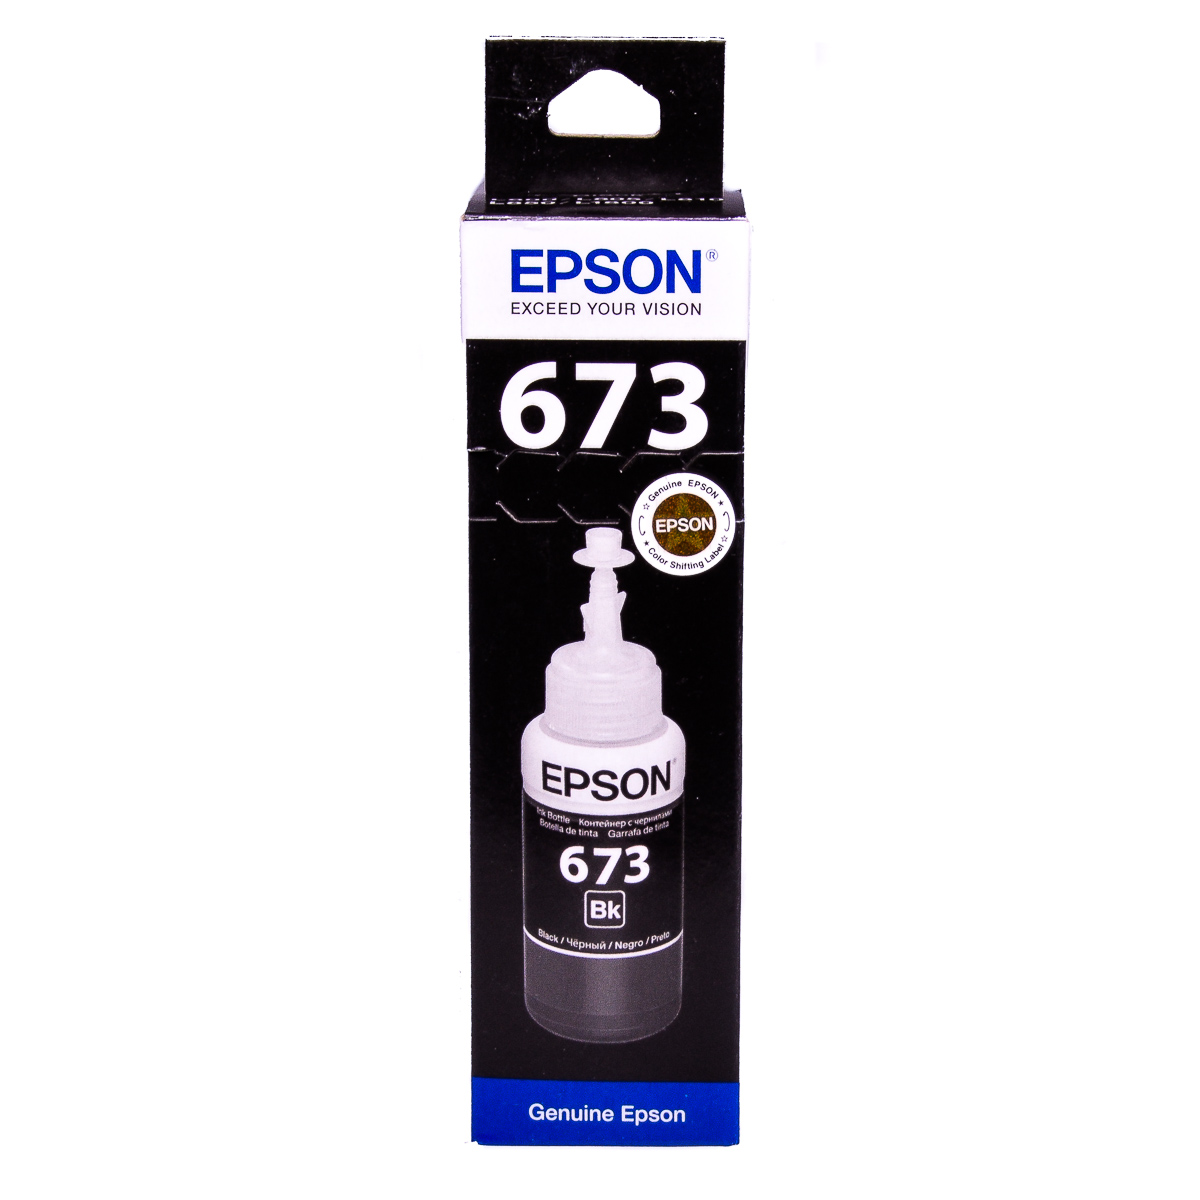 Epson T0801 Black original dye ink refill Replaces Stylus R360